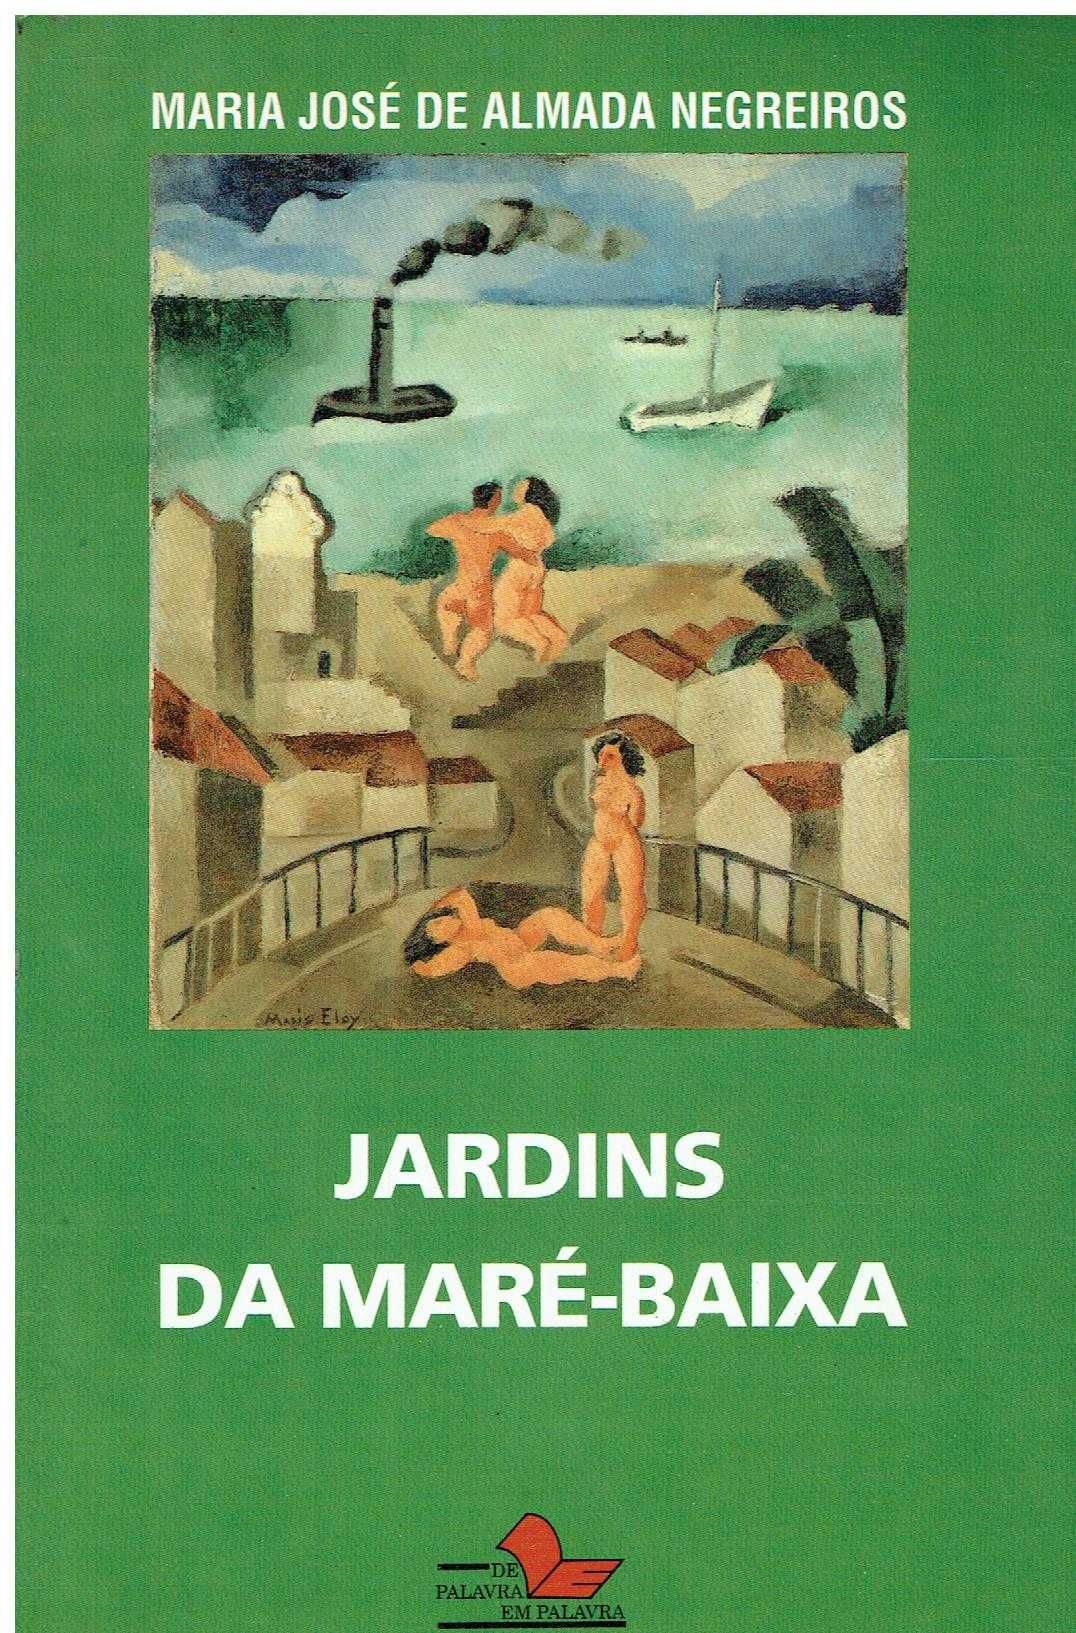 13777

Jardins da Maré Baixa 
de Maria José Almada Negreiros